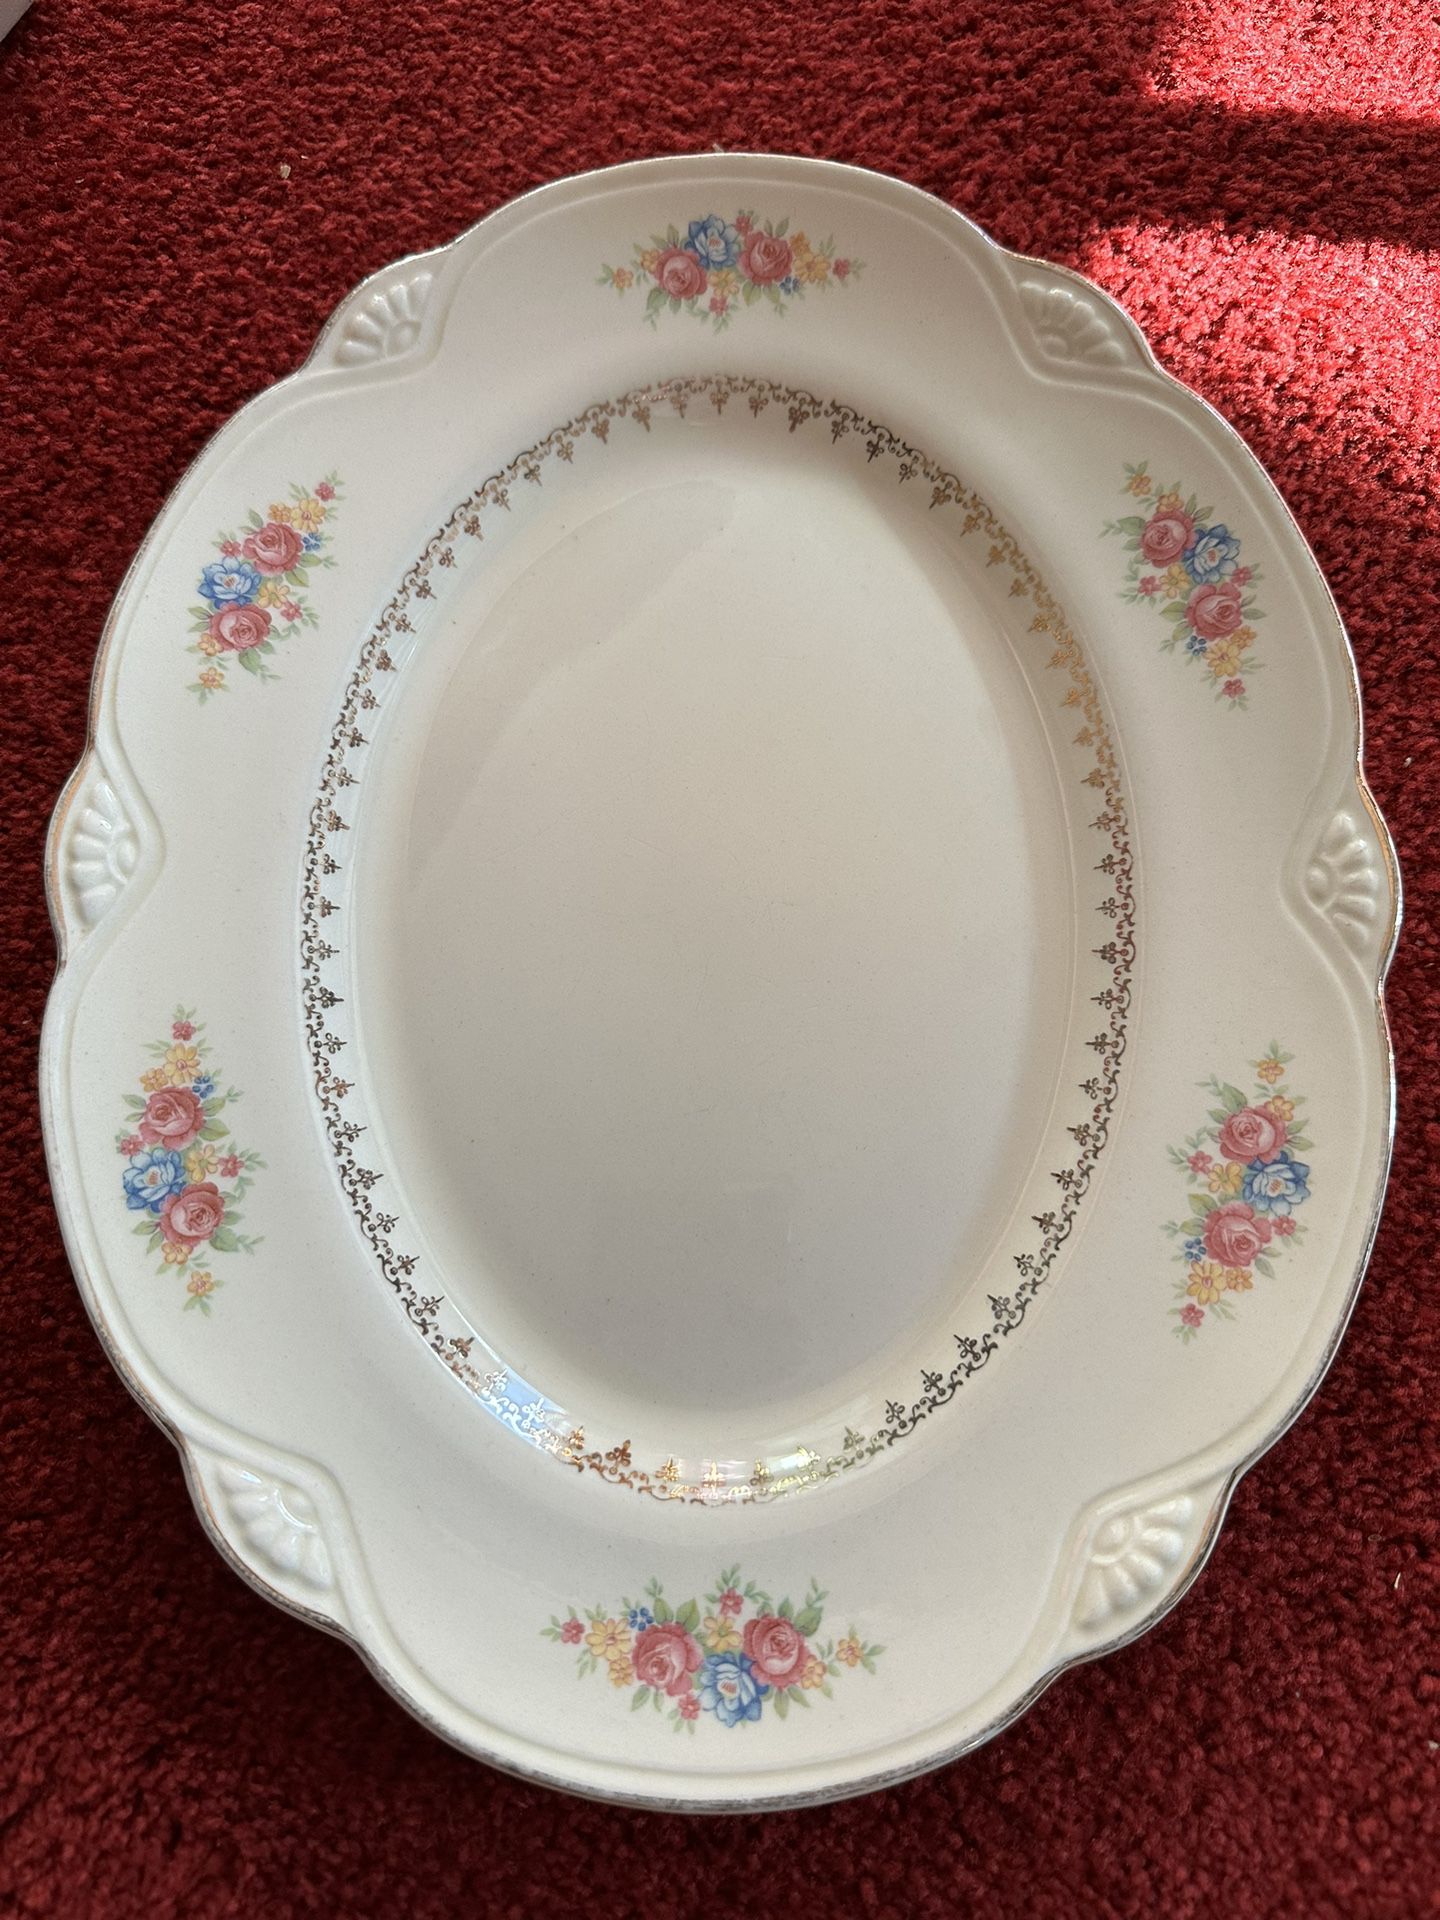  Vintage Homer Laughlin bone china platter 